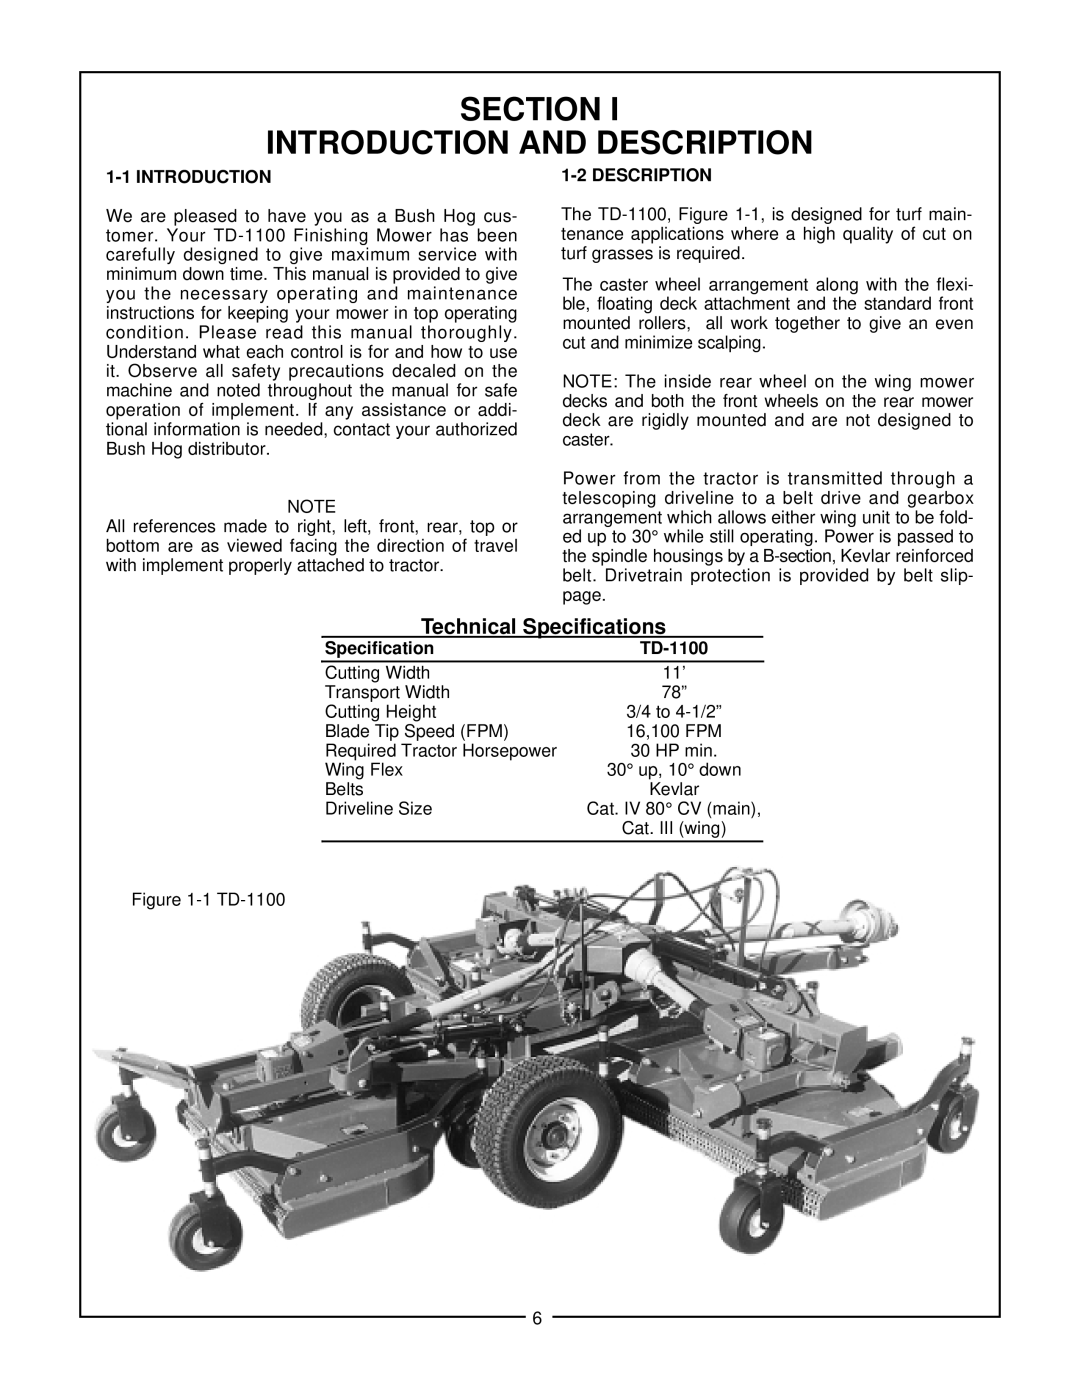 Bush Hog TD-1100 manual Section Introduction And Description, Technical Specifications, 1-1INTRODUCTION, 1-2DESCRIPTION 